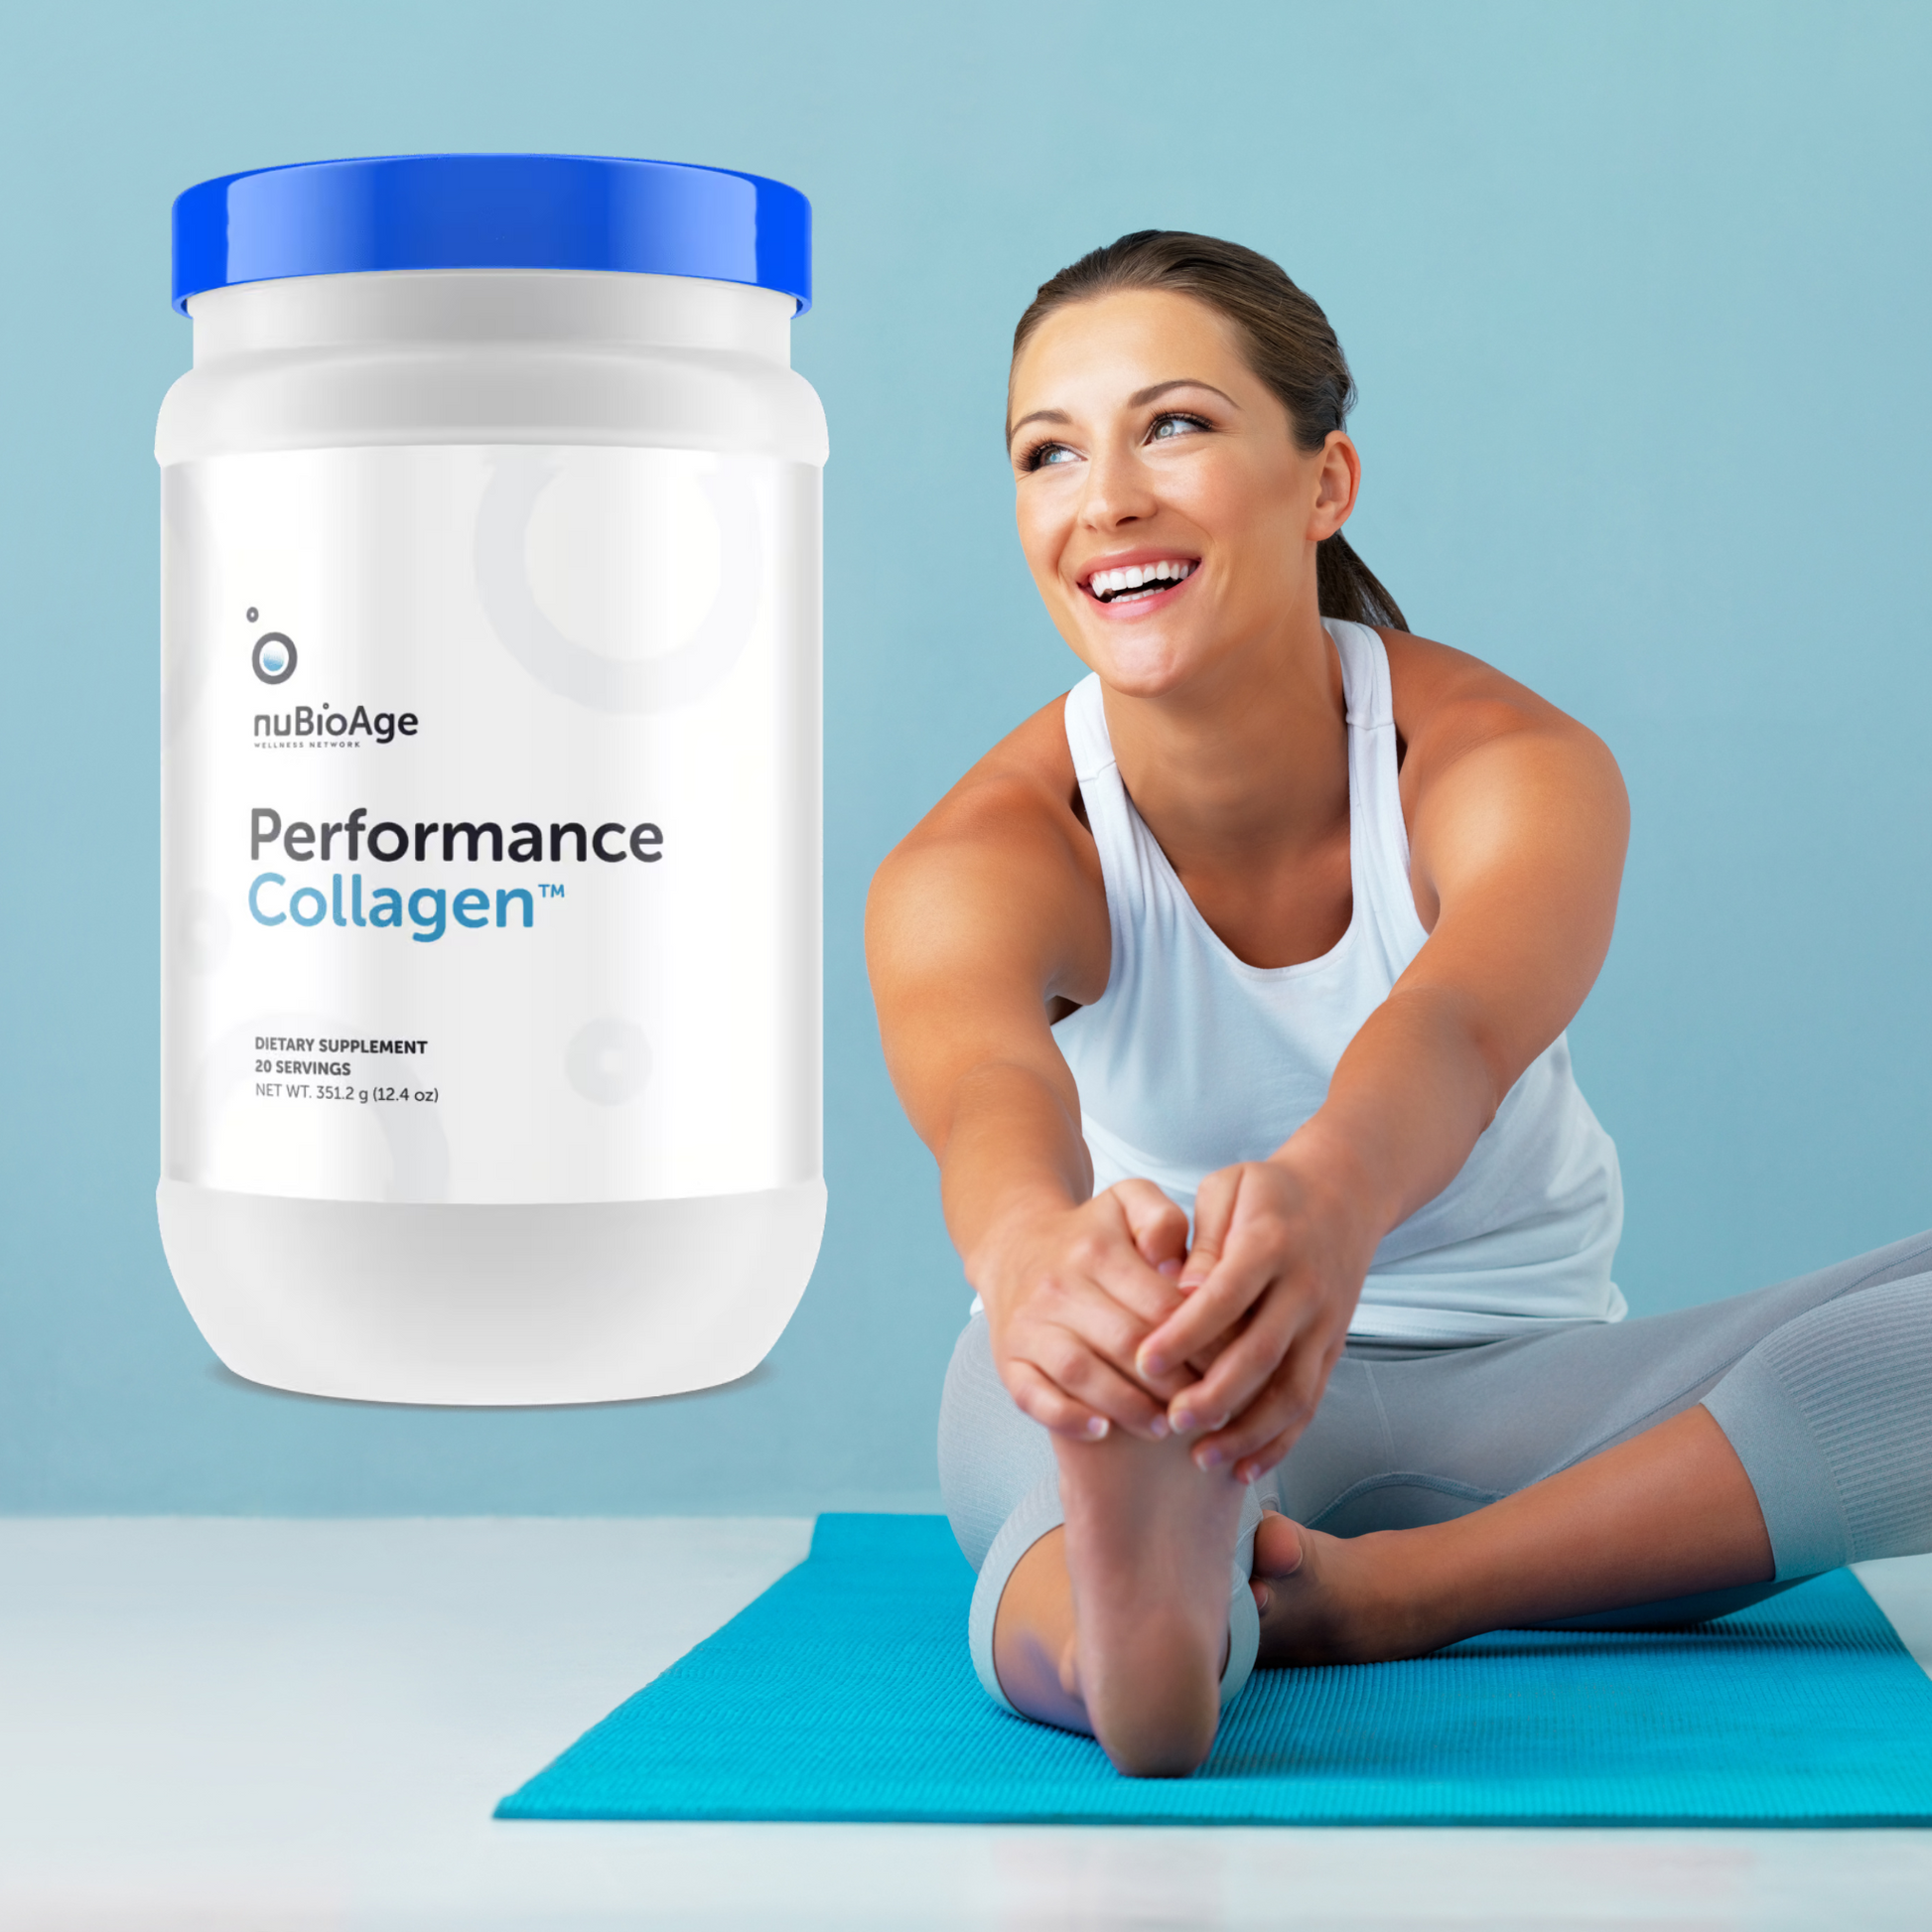 Performance Collagen Nubioage Benefits